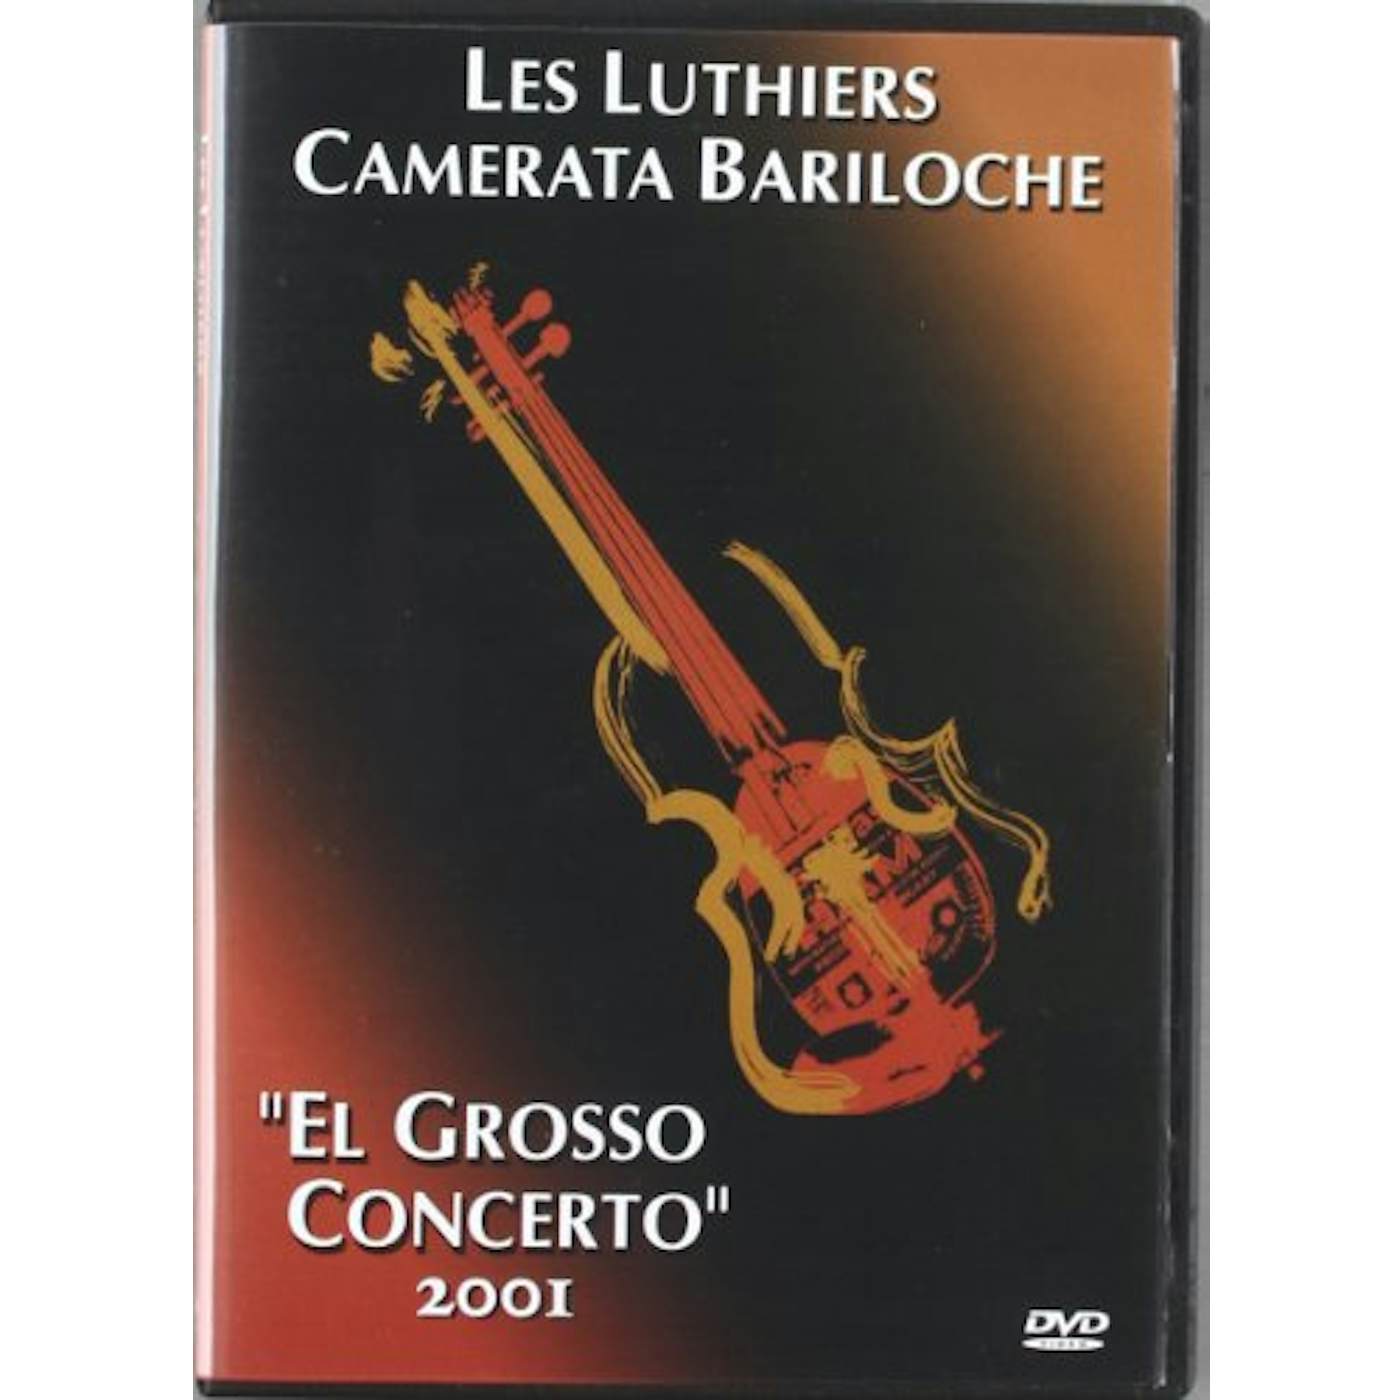 Les Luthiers GROSSO CONCIERTO (9) DVD